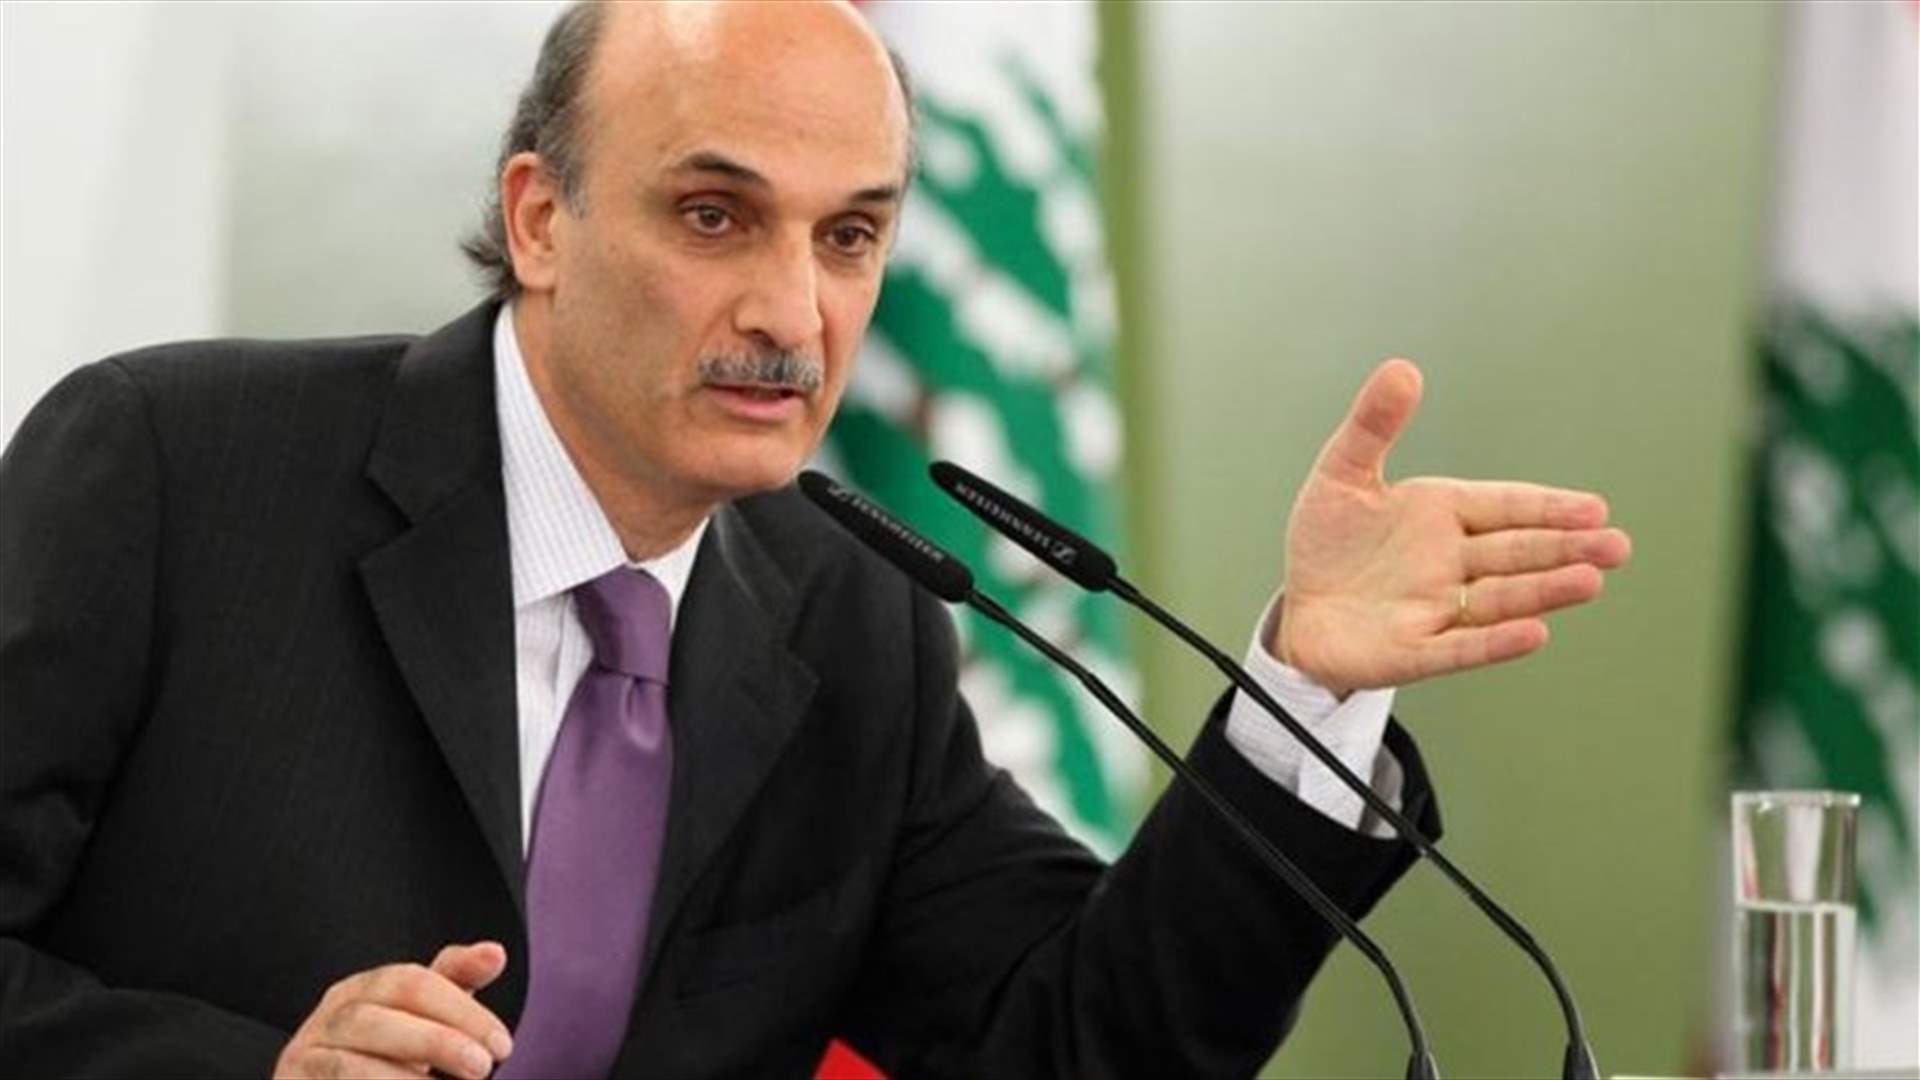 Geagea says Rifi must refer Samaha’s case to Judicial Council